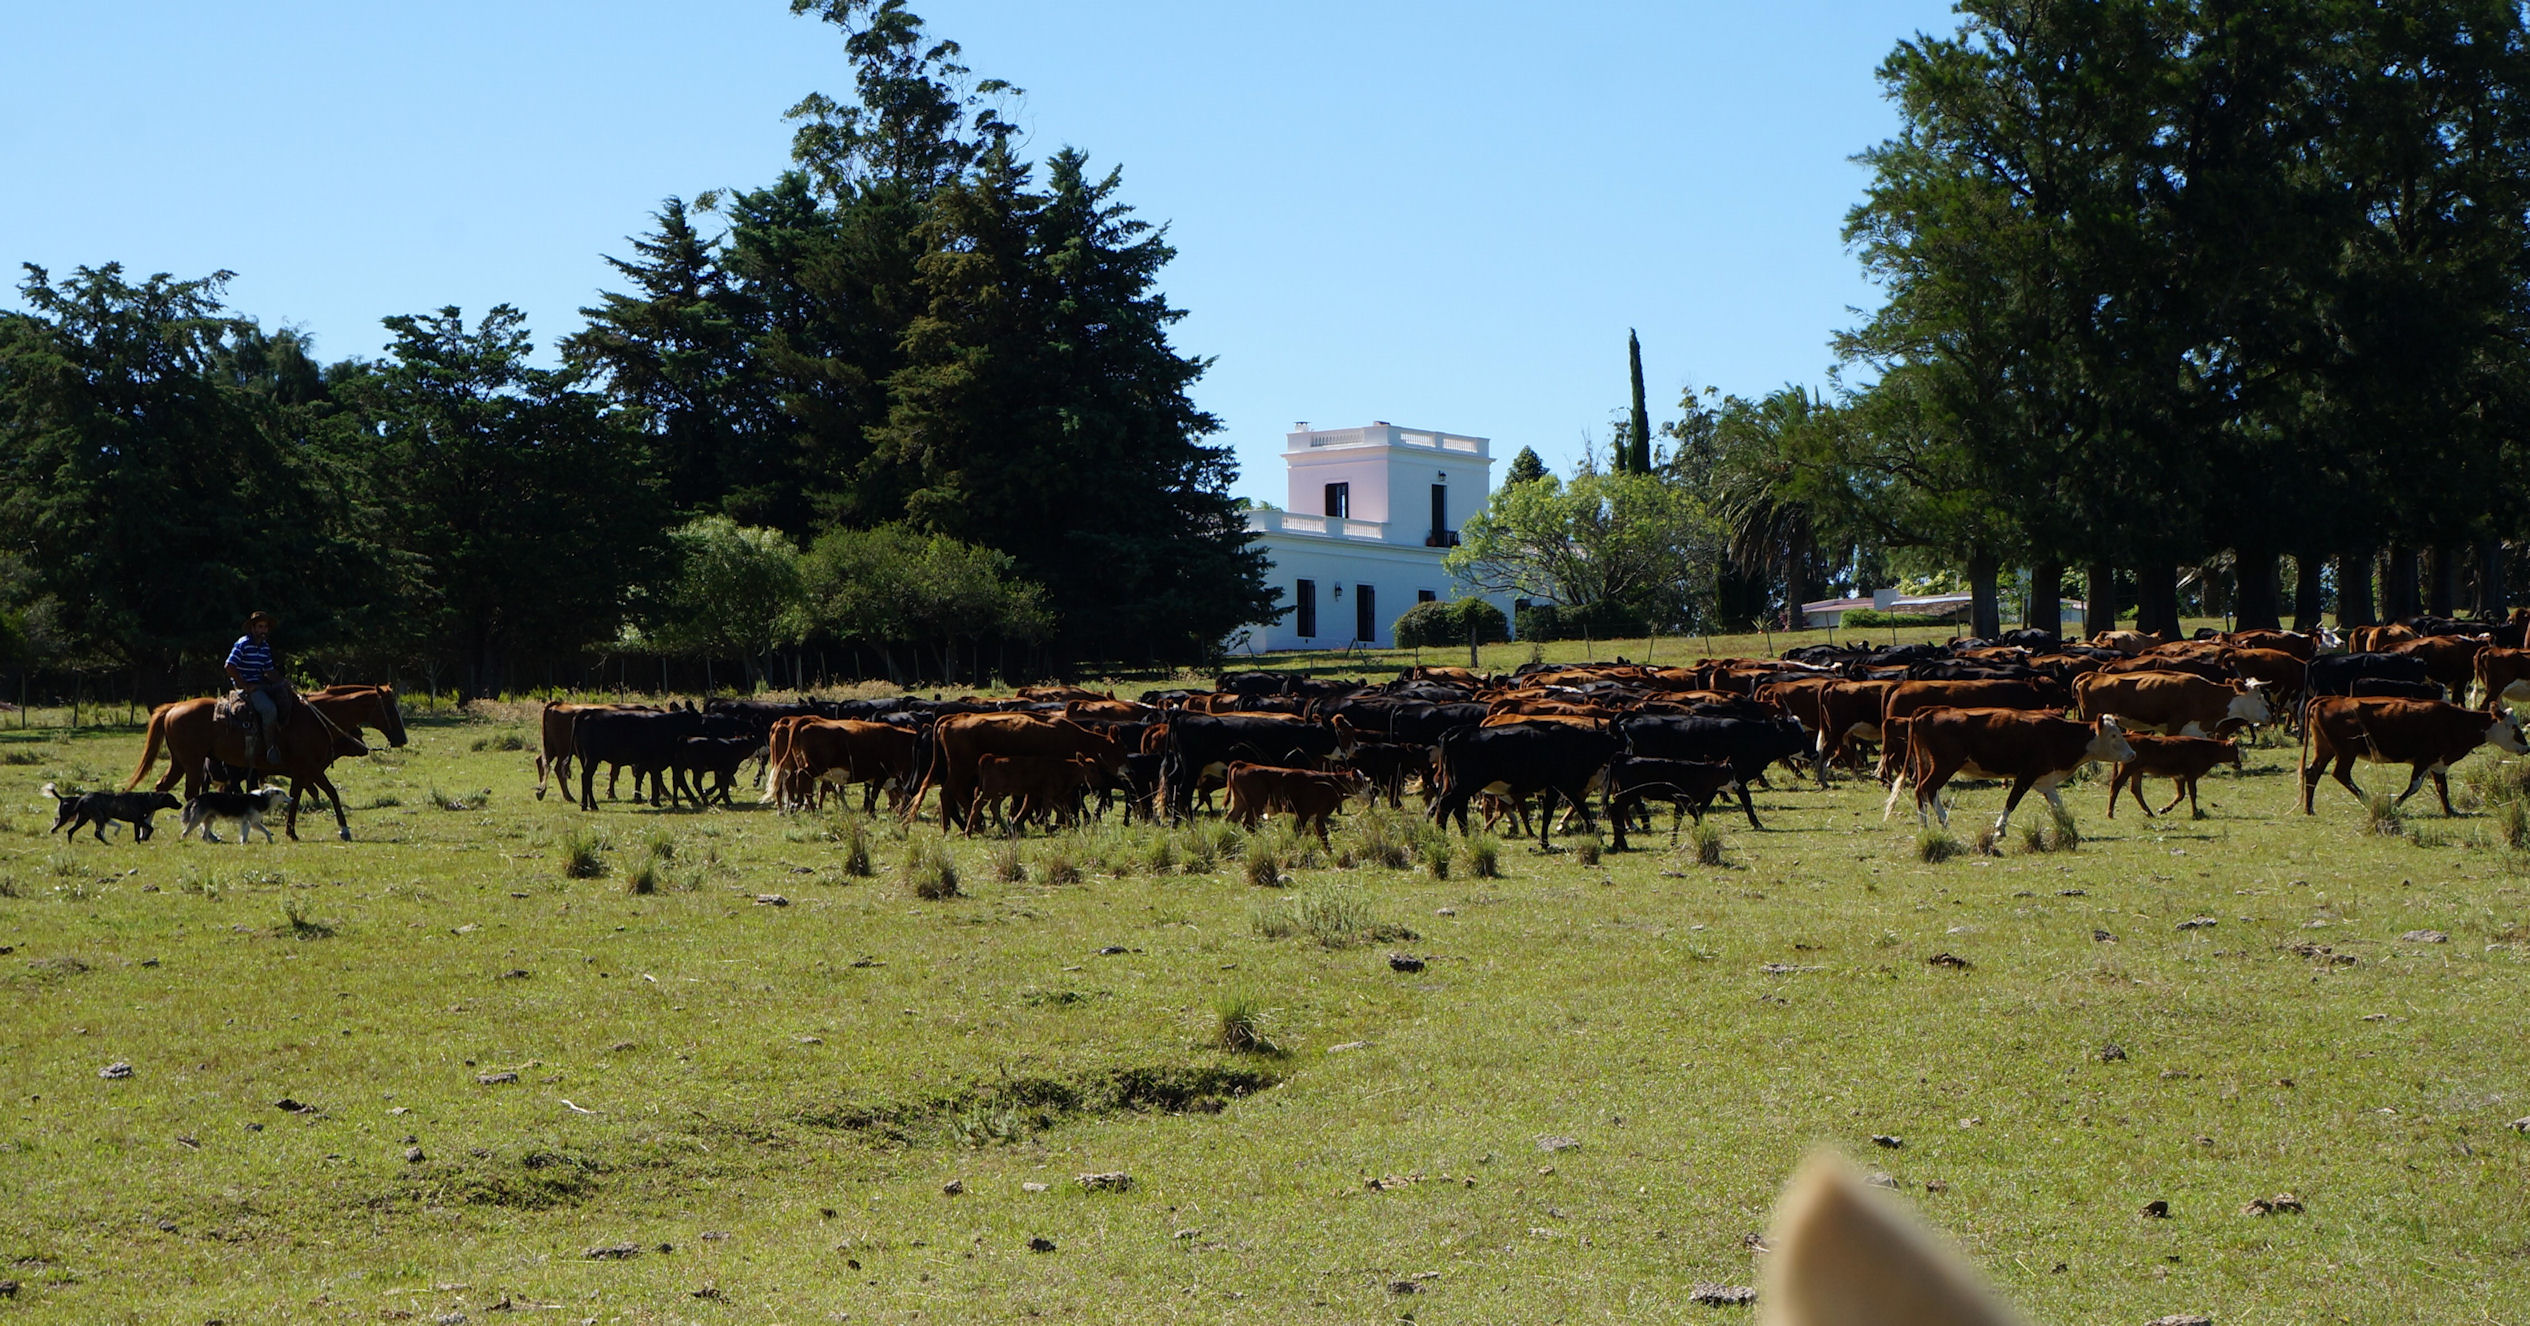 cattle w historic estancia mansion in back